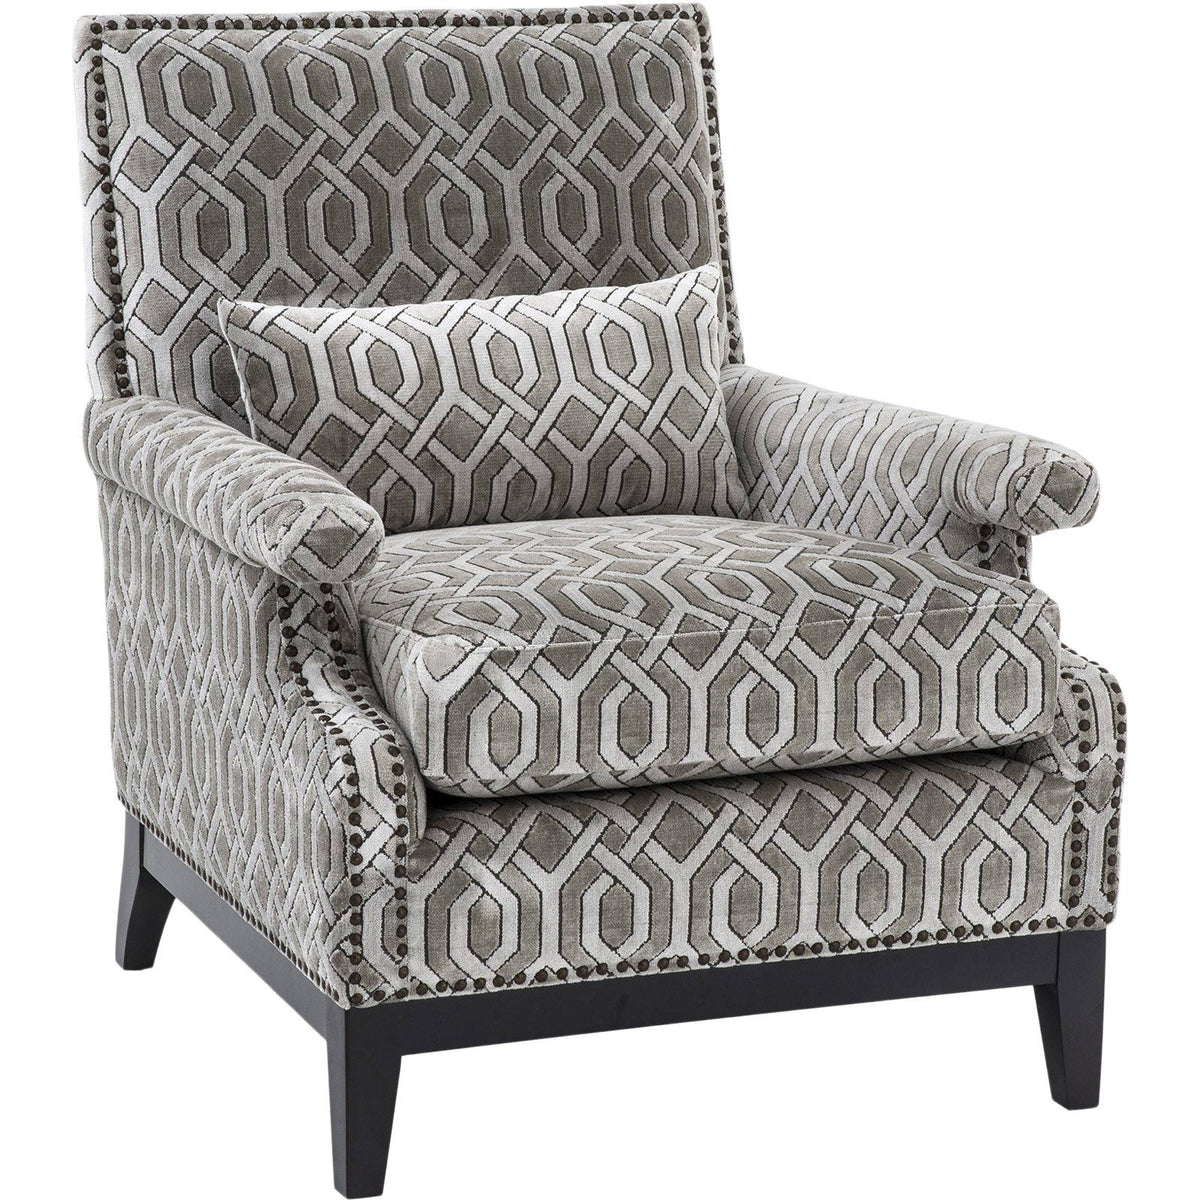 Goldoni Chair - Grey